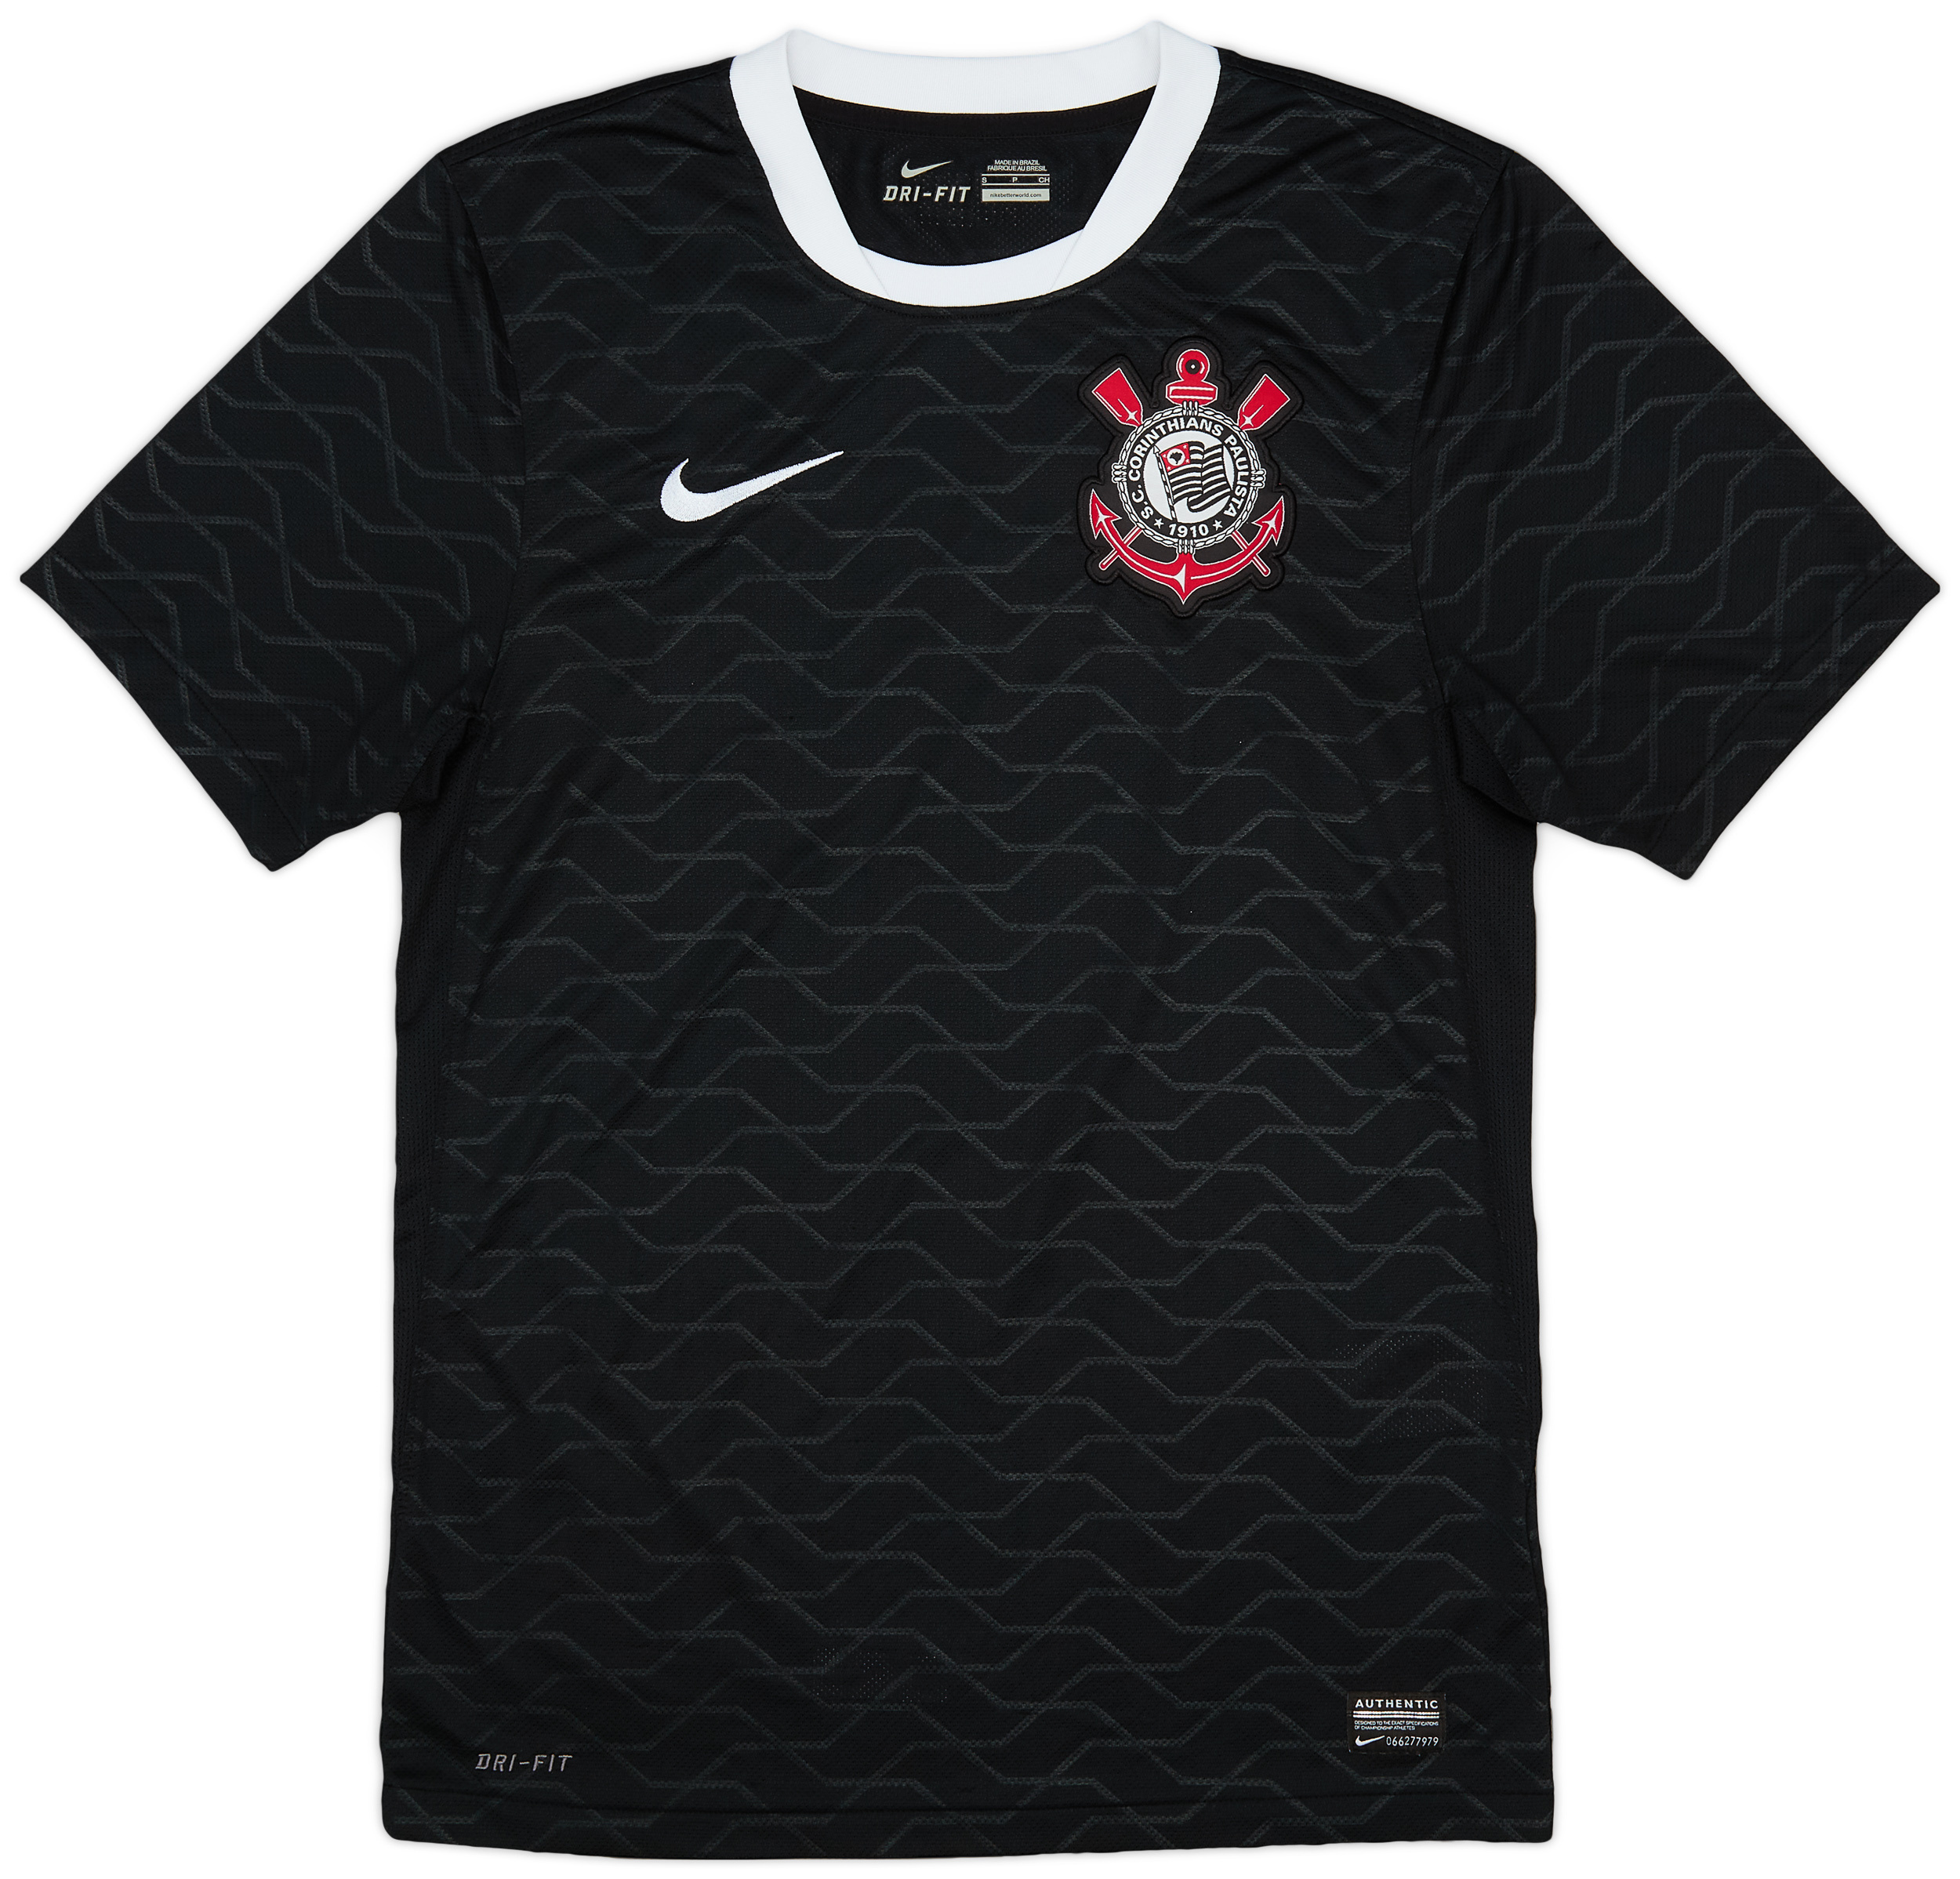 Corinthians  Uit  shirt  (Original)